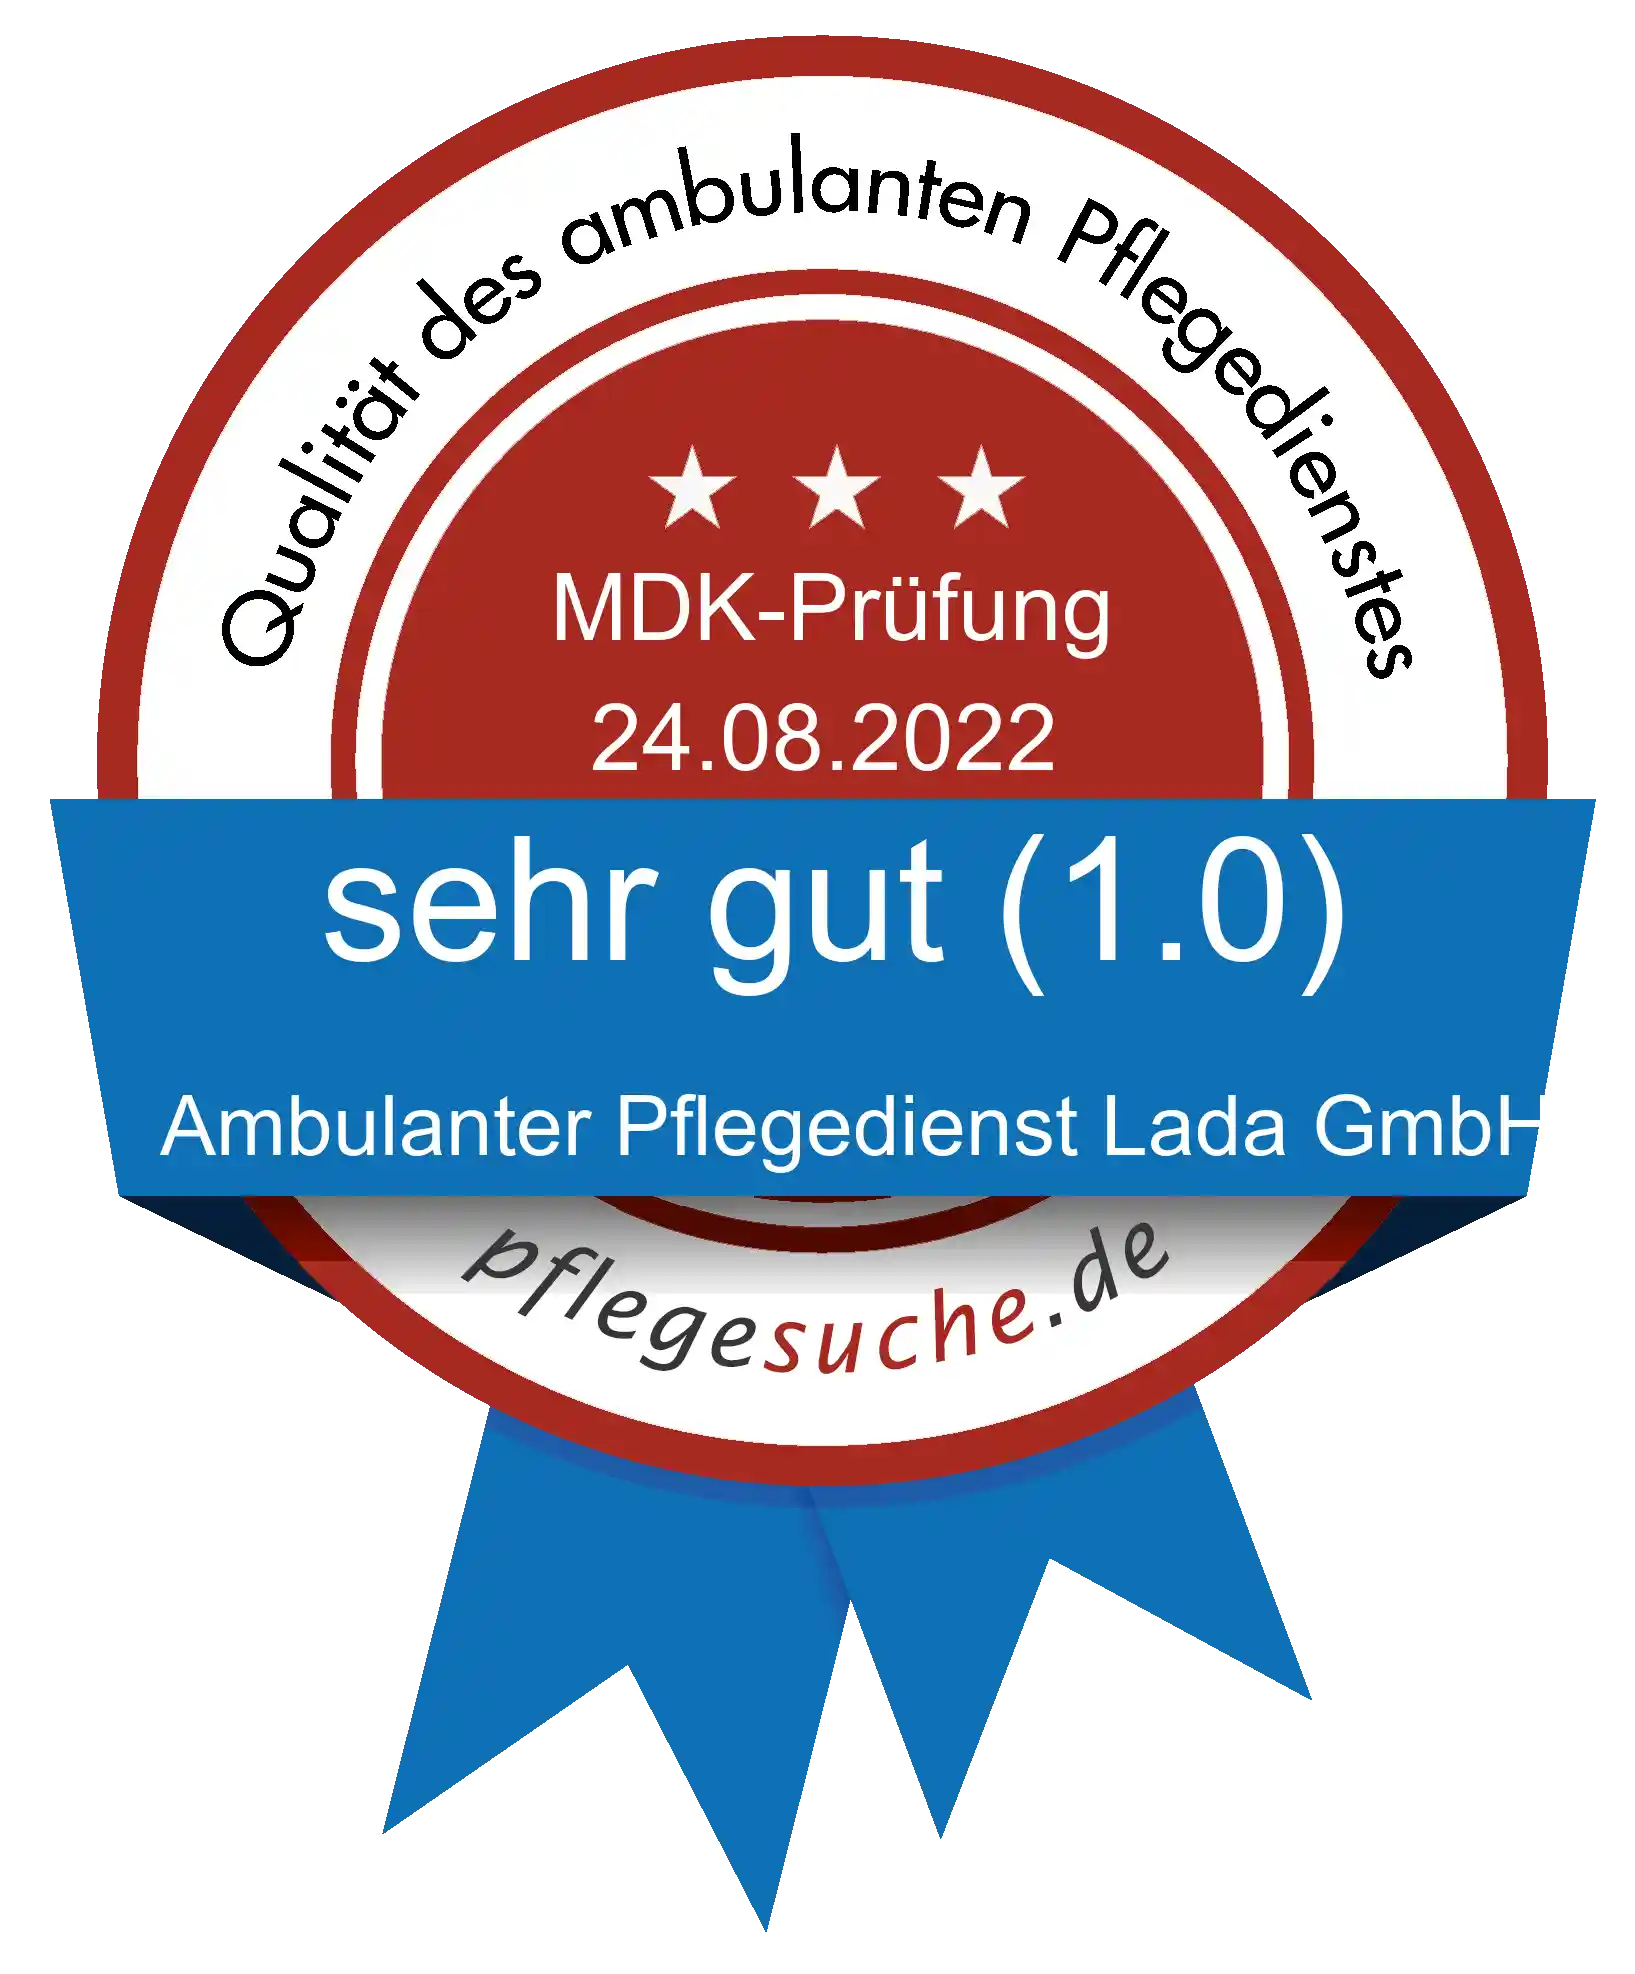 Siegel Benotung: Ambulanter Pflegedienst Lada GmbH